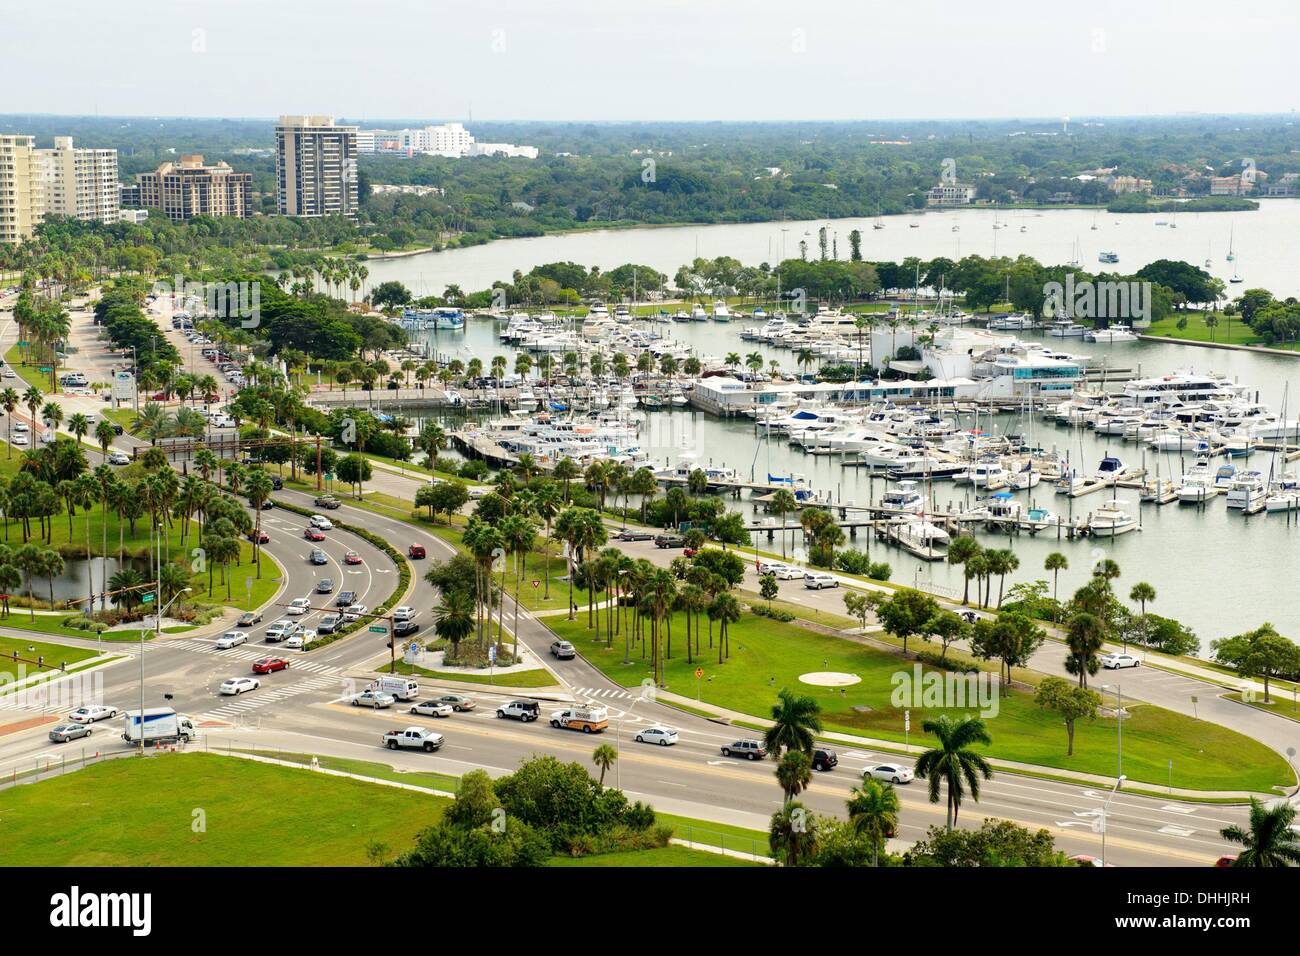 The city of Sarasota, Florida on 23.10.2013. Photo: picture alliance / Robert Schlesinger Stock Photo